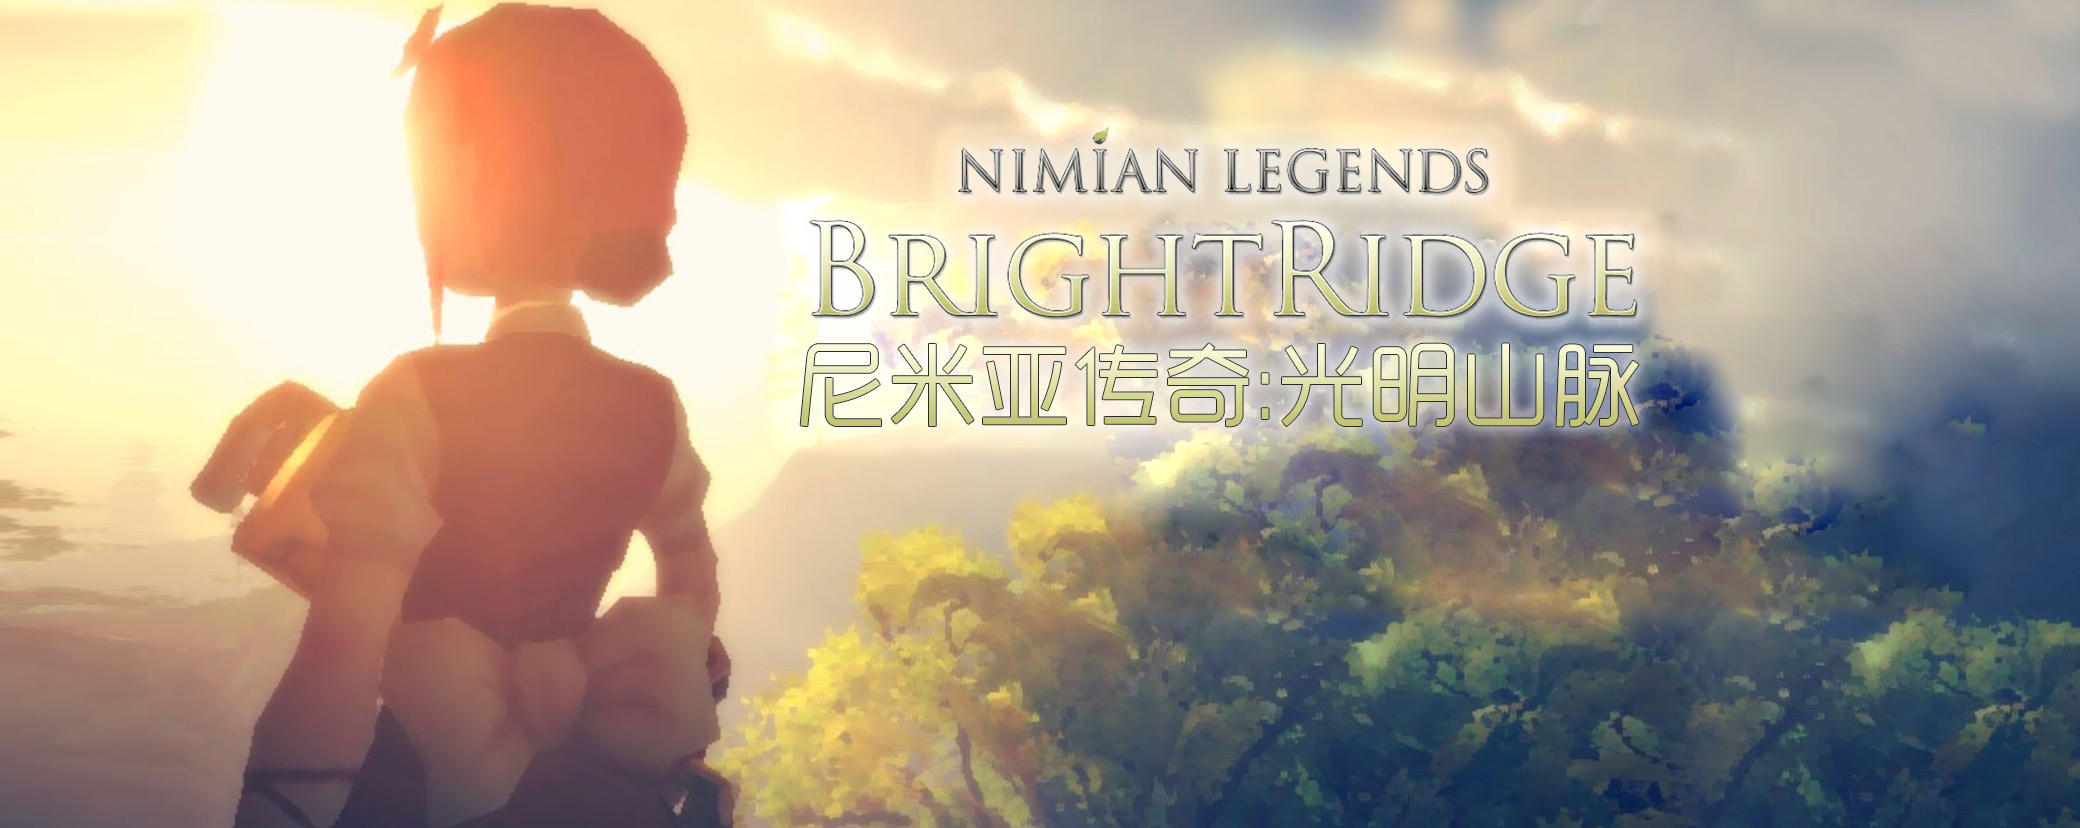 Banner of Nimian-Legenden: BrightRidge 